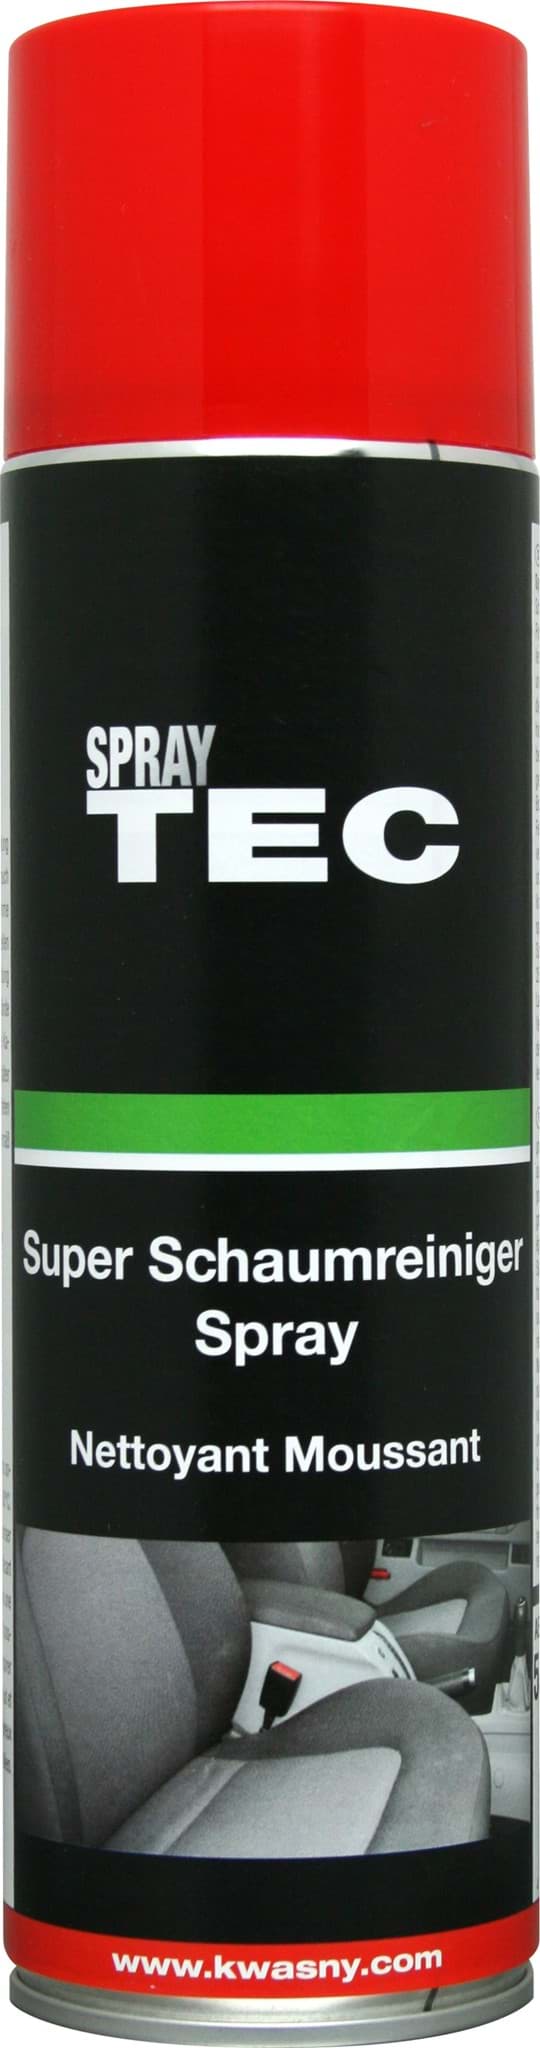 Изображение Super Schaumreiniger Spray 500ml SprayTEC